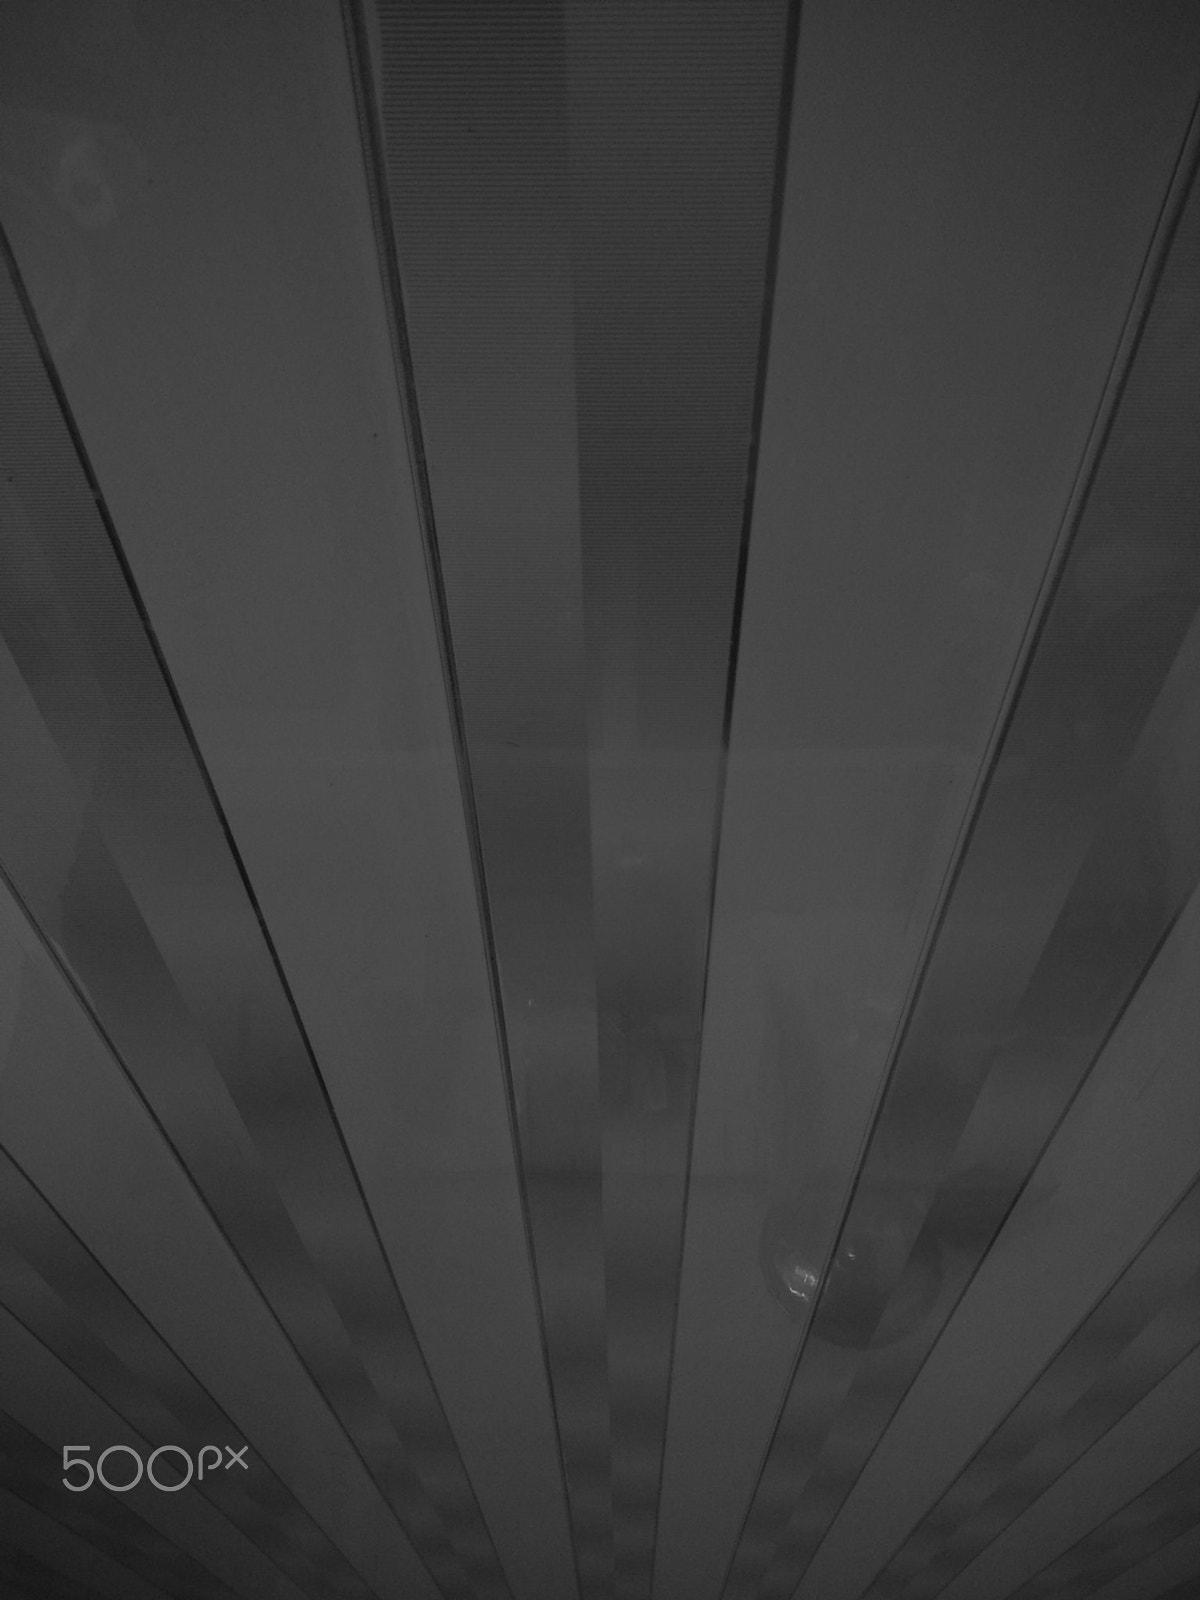 Xiaomi MI4 sample photo. Ceiling photography